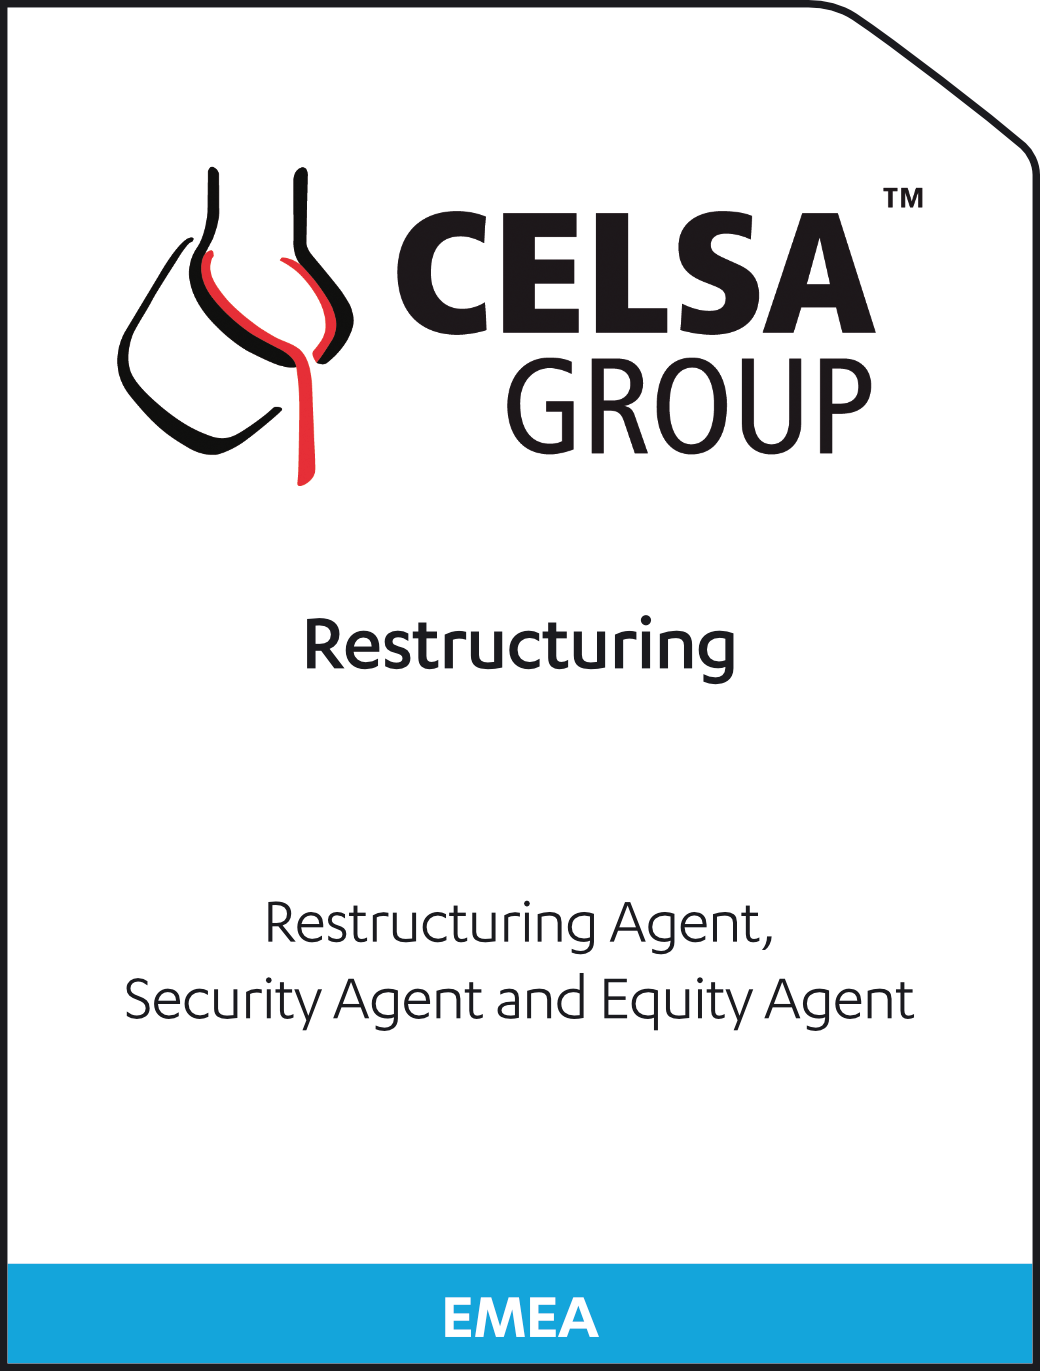 CELSA Group Restructuring